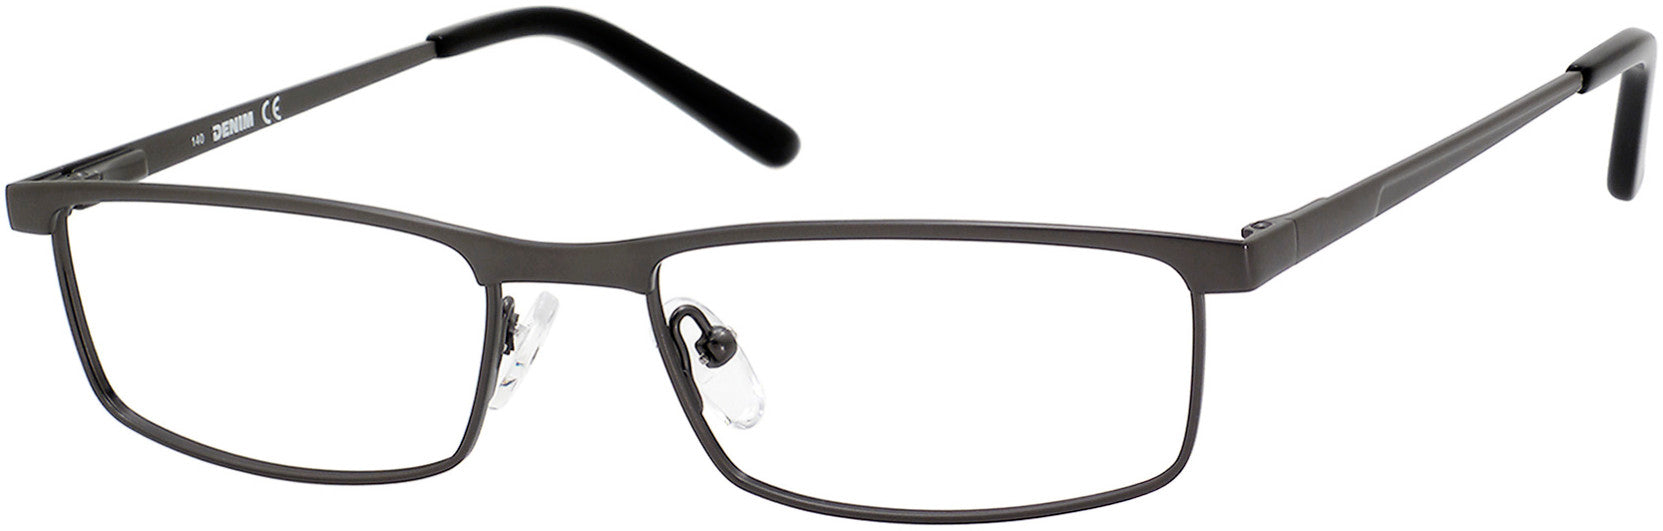  Denim 148 Rectangular Eyeglasses 0CX1-0CX1  Matte Gunmetal (00 Demo Lens)